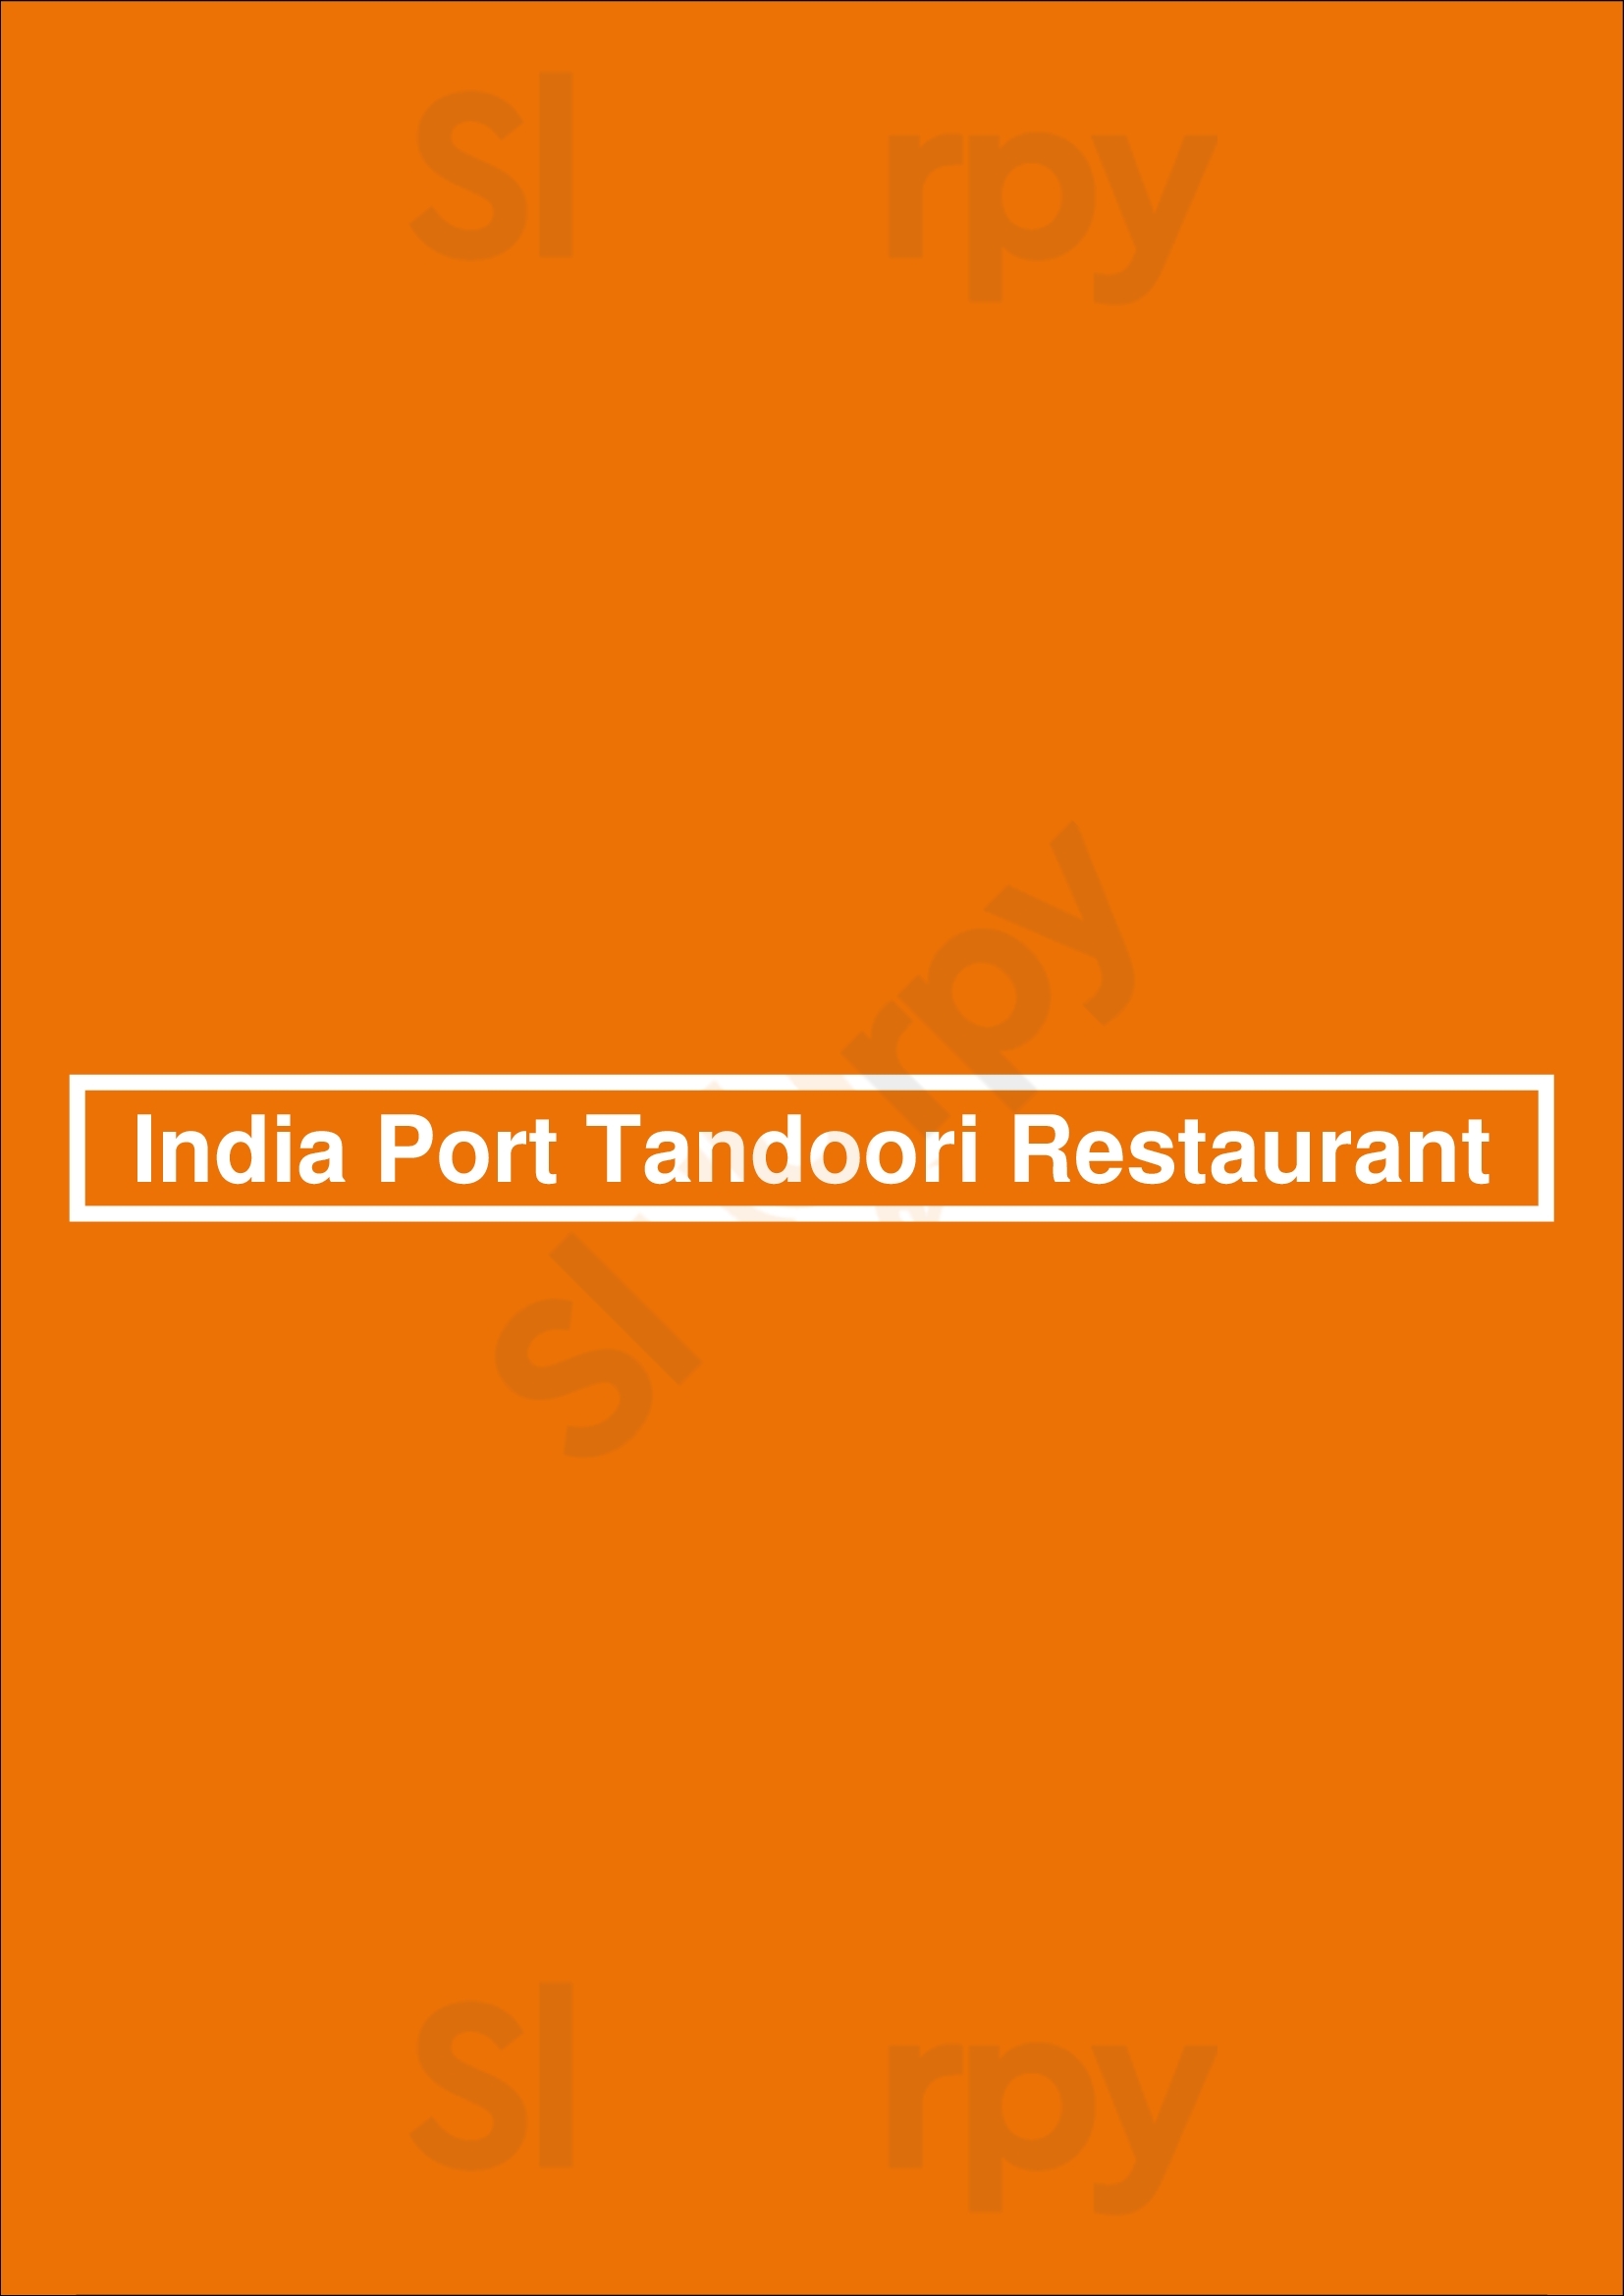 India Port Tandoori Restaurant Utrecht Menu - 1